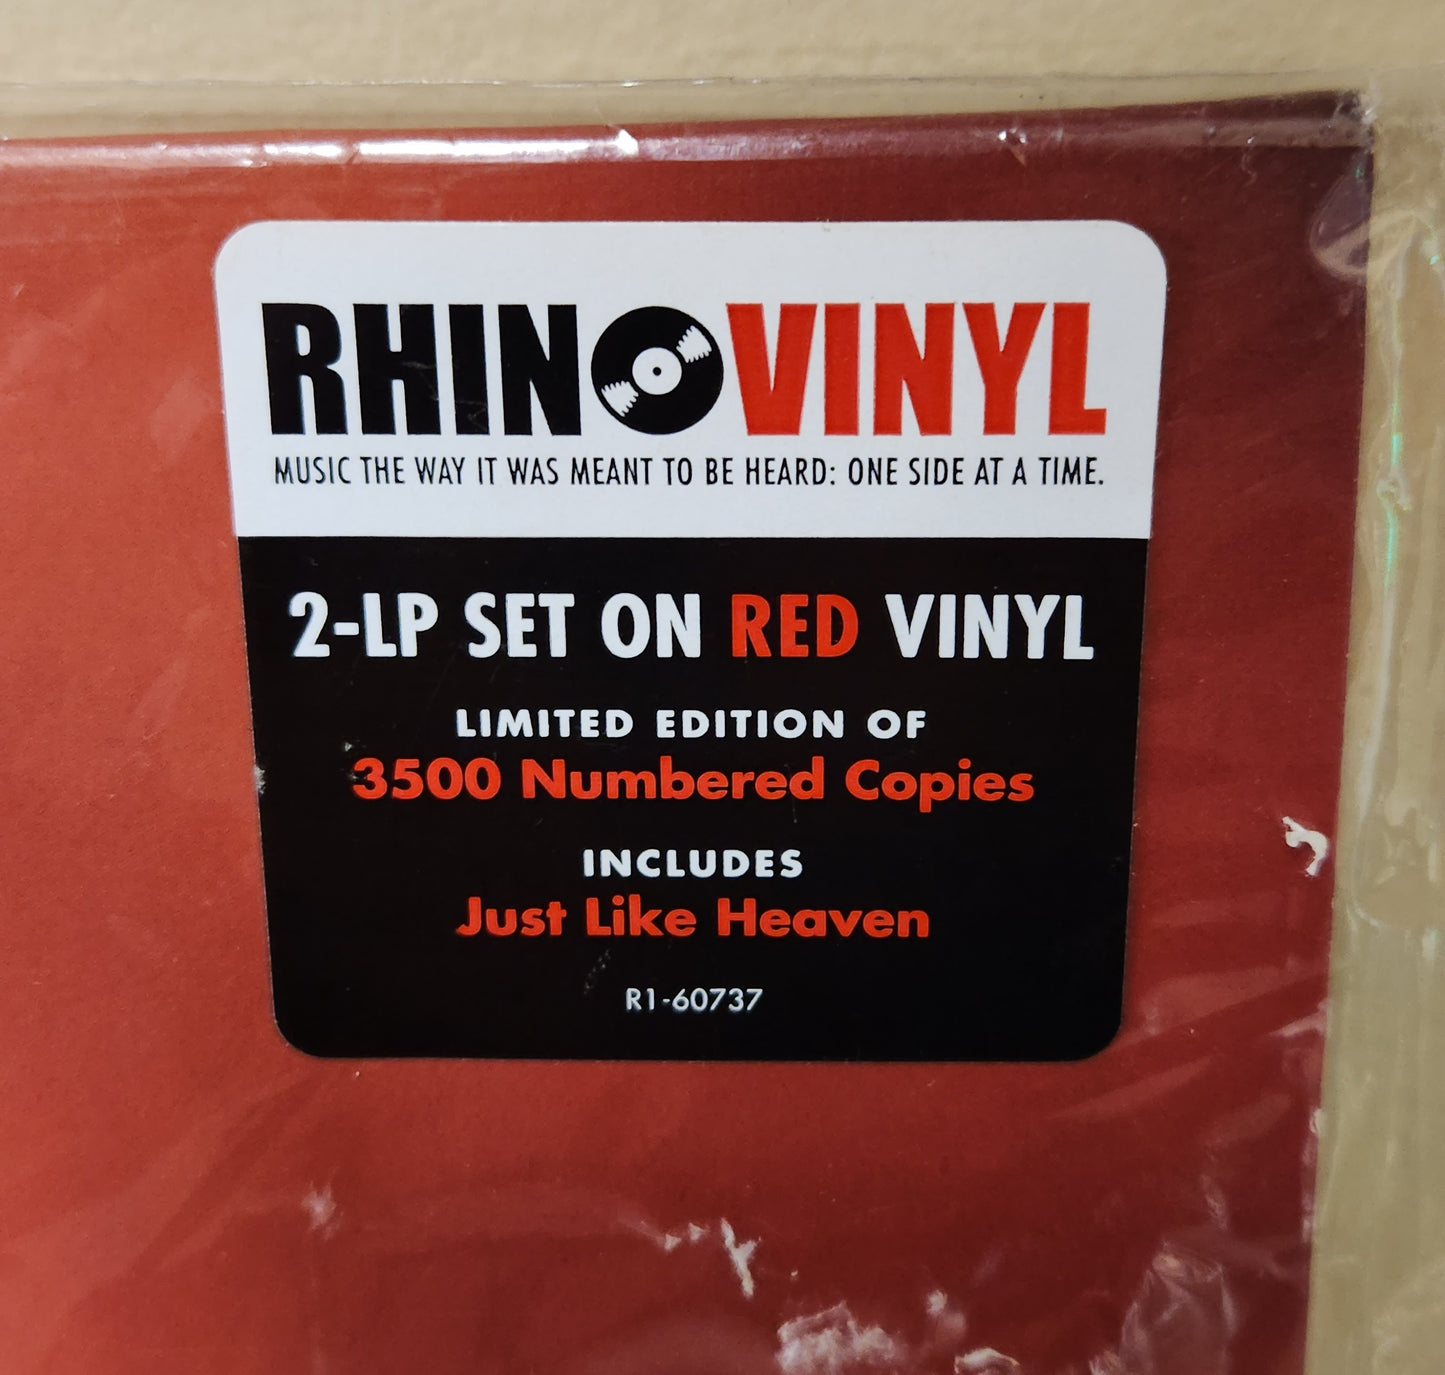 The Cure "Kiss Me Kiss Me Kiss Me" 2013 Ltd Ed 2xLP Alt Rock Reissue on Red Vinyl